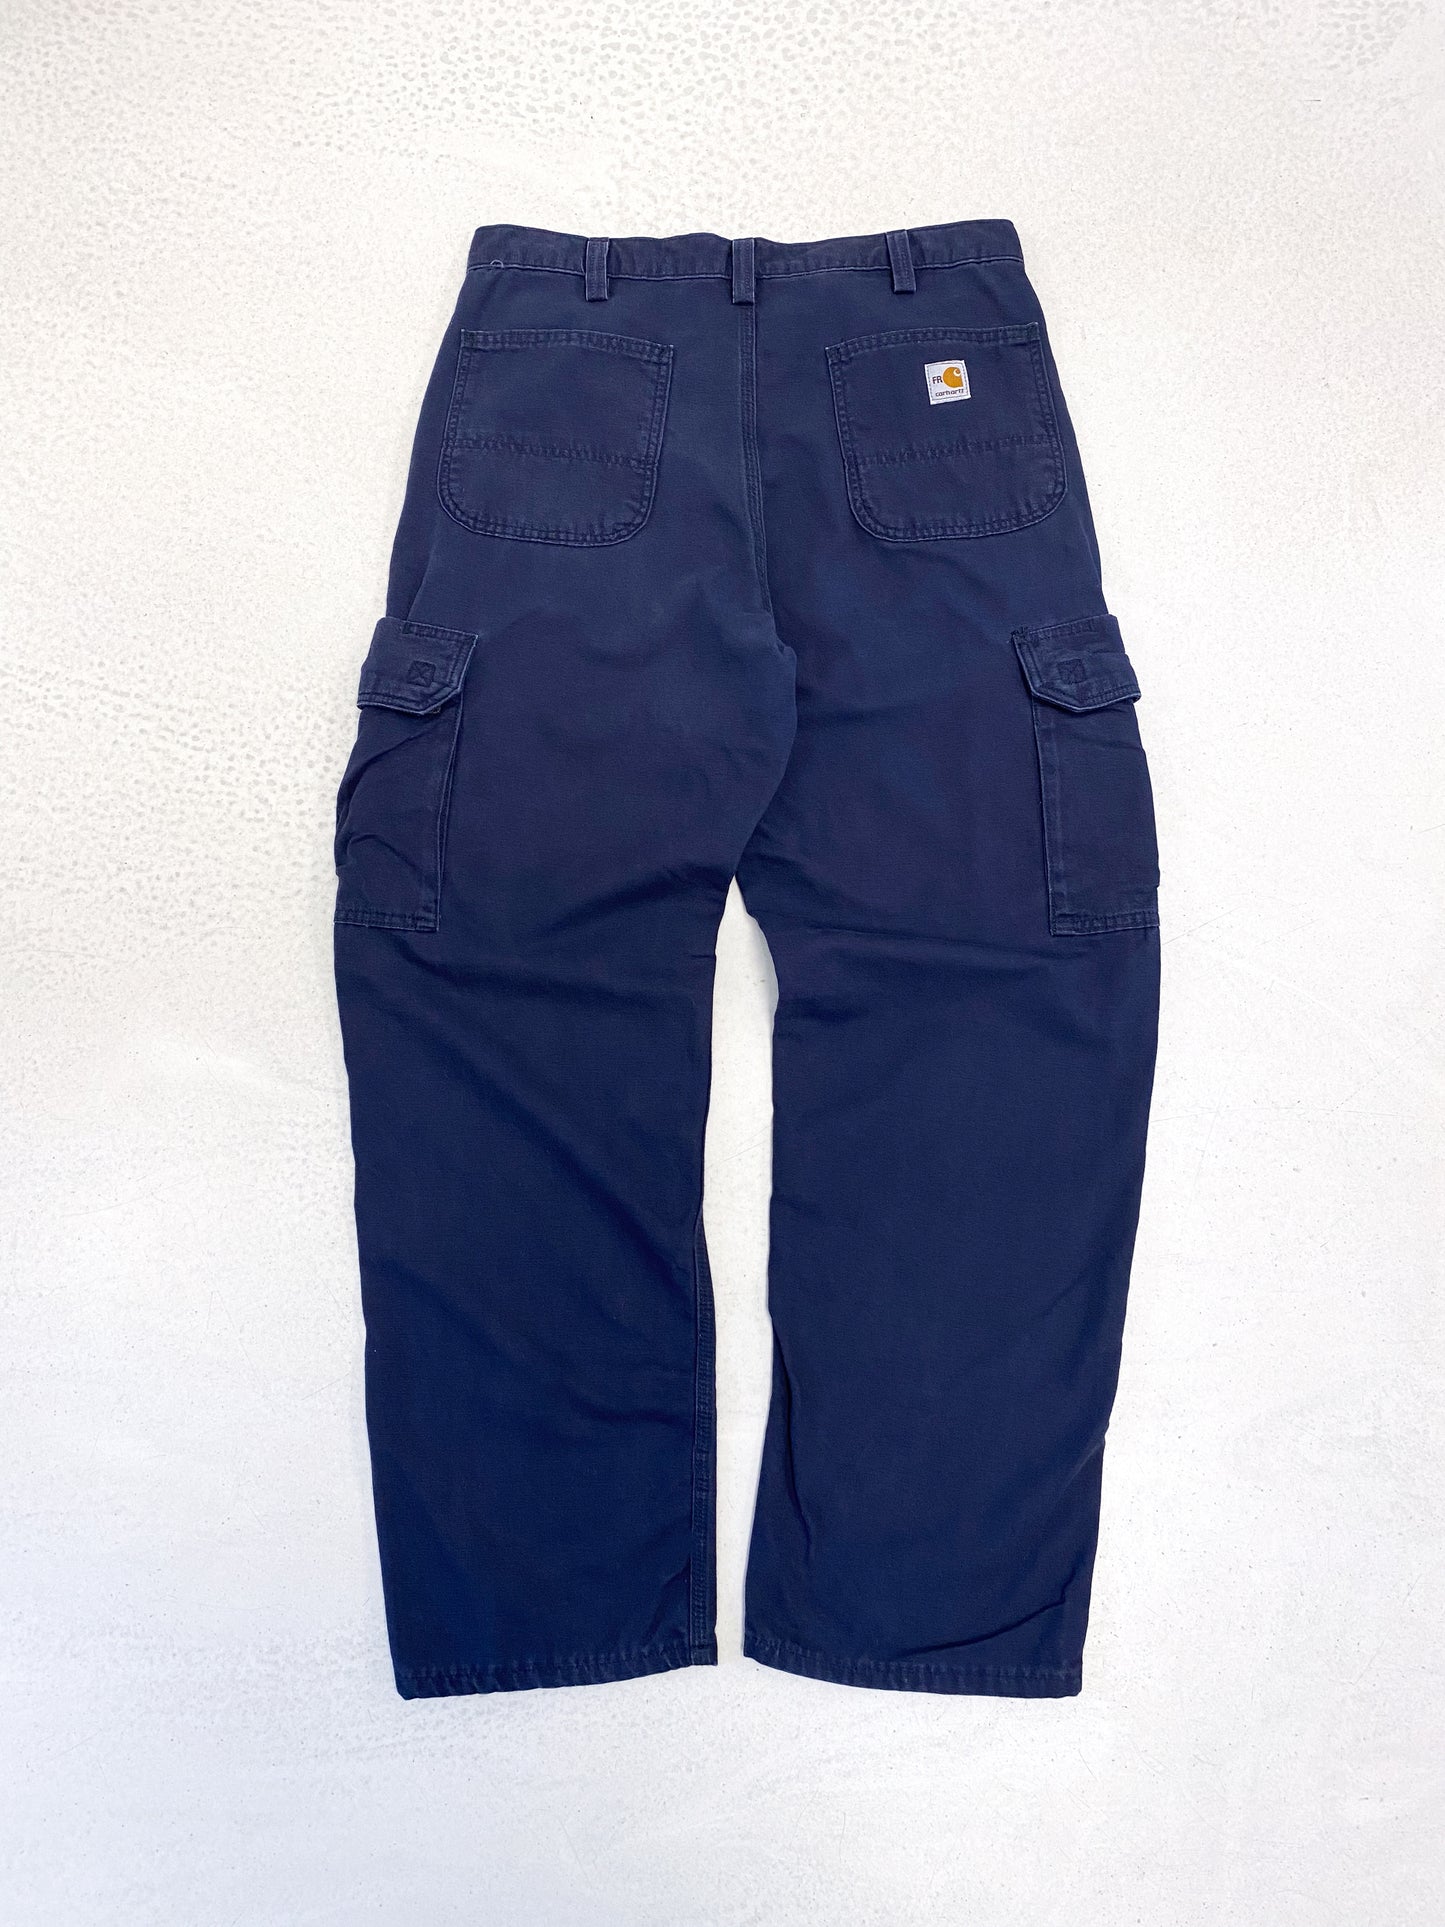 Carhartt bukser (34x32)